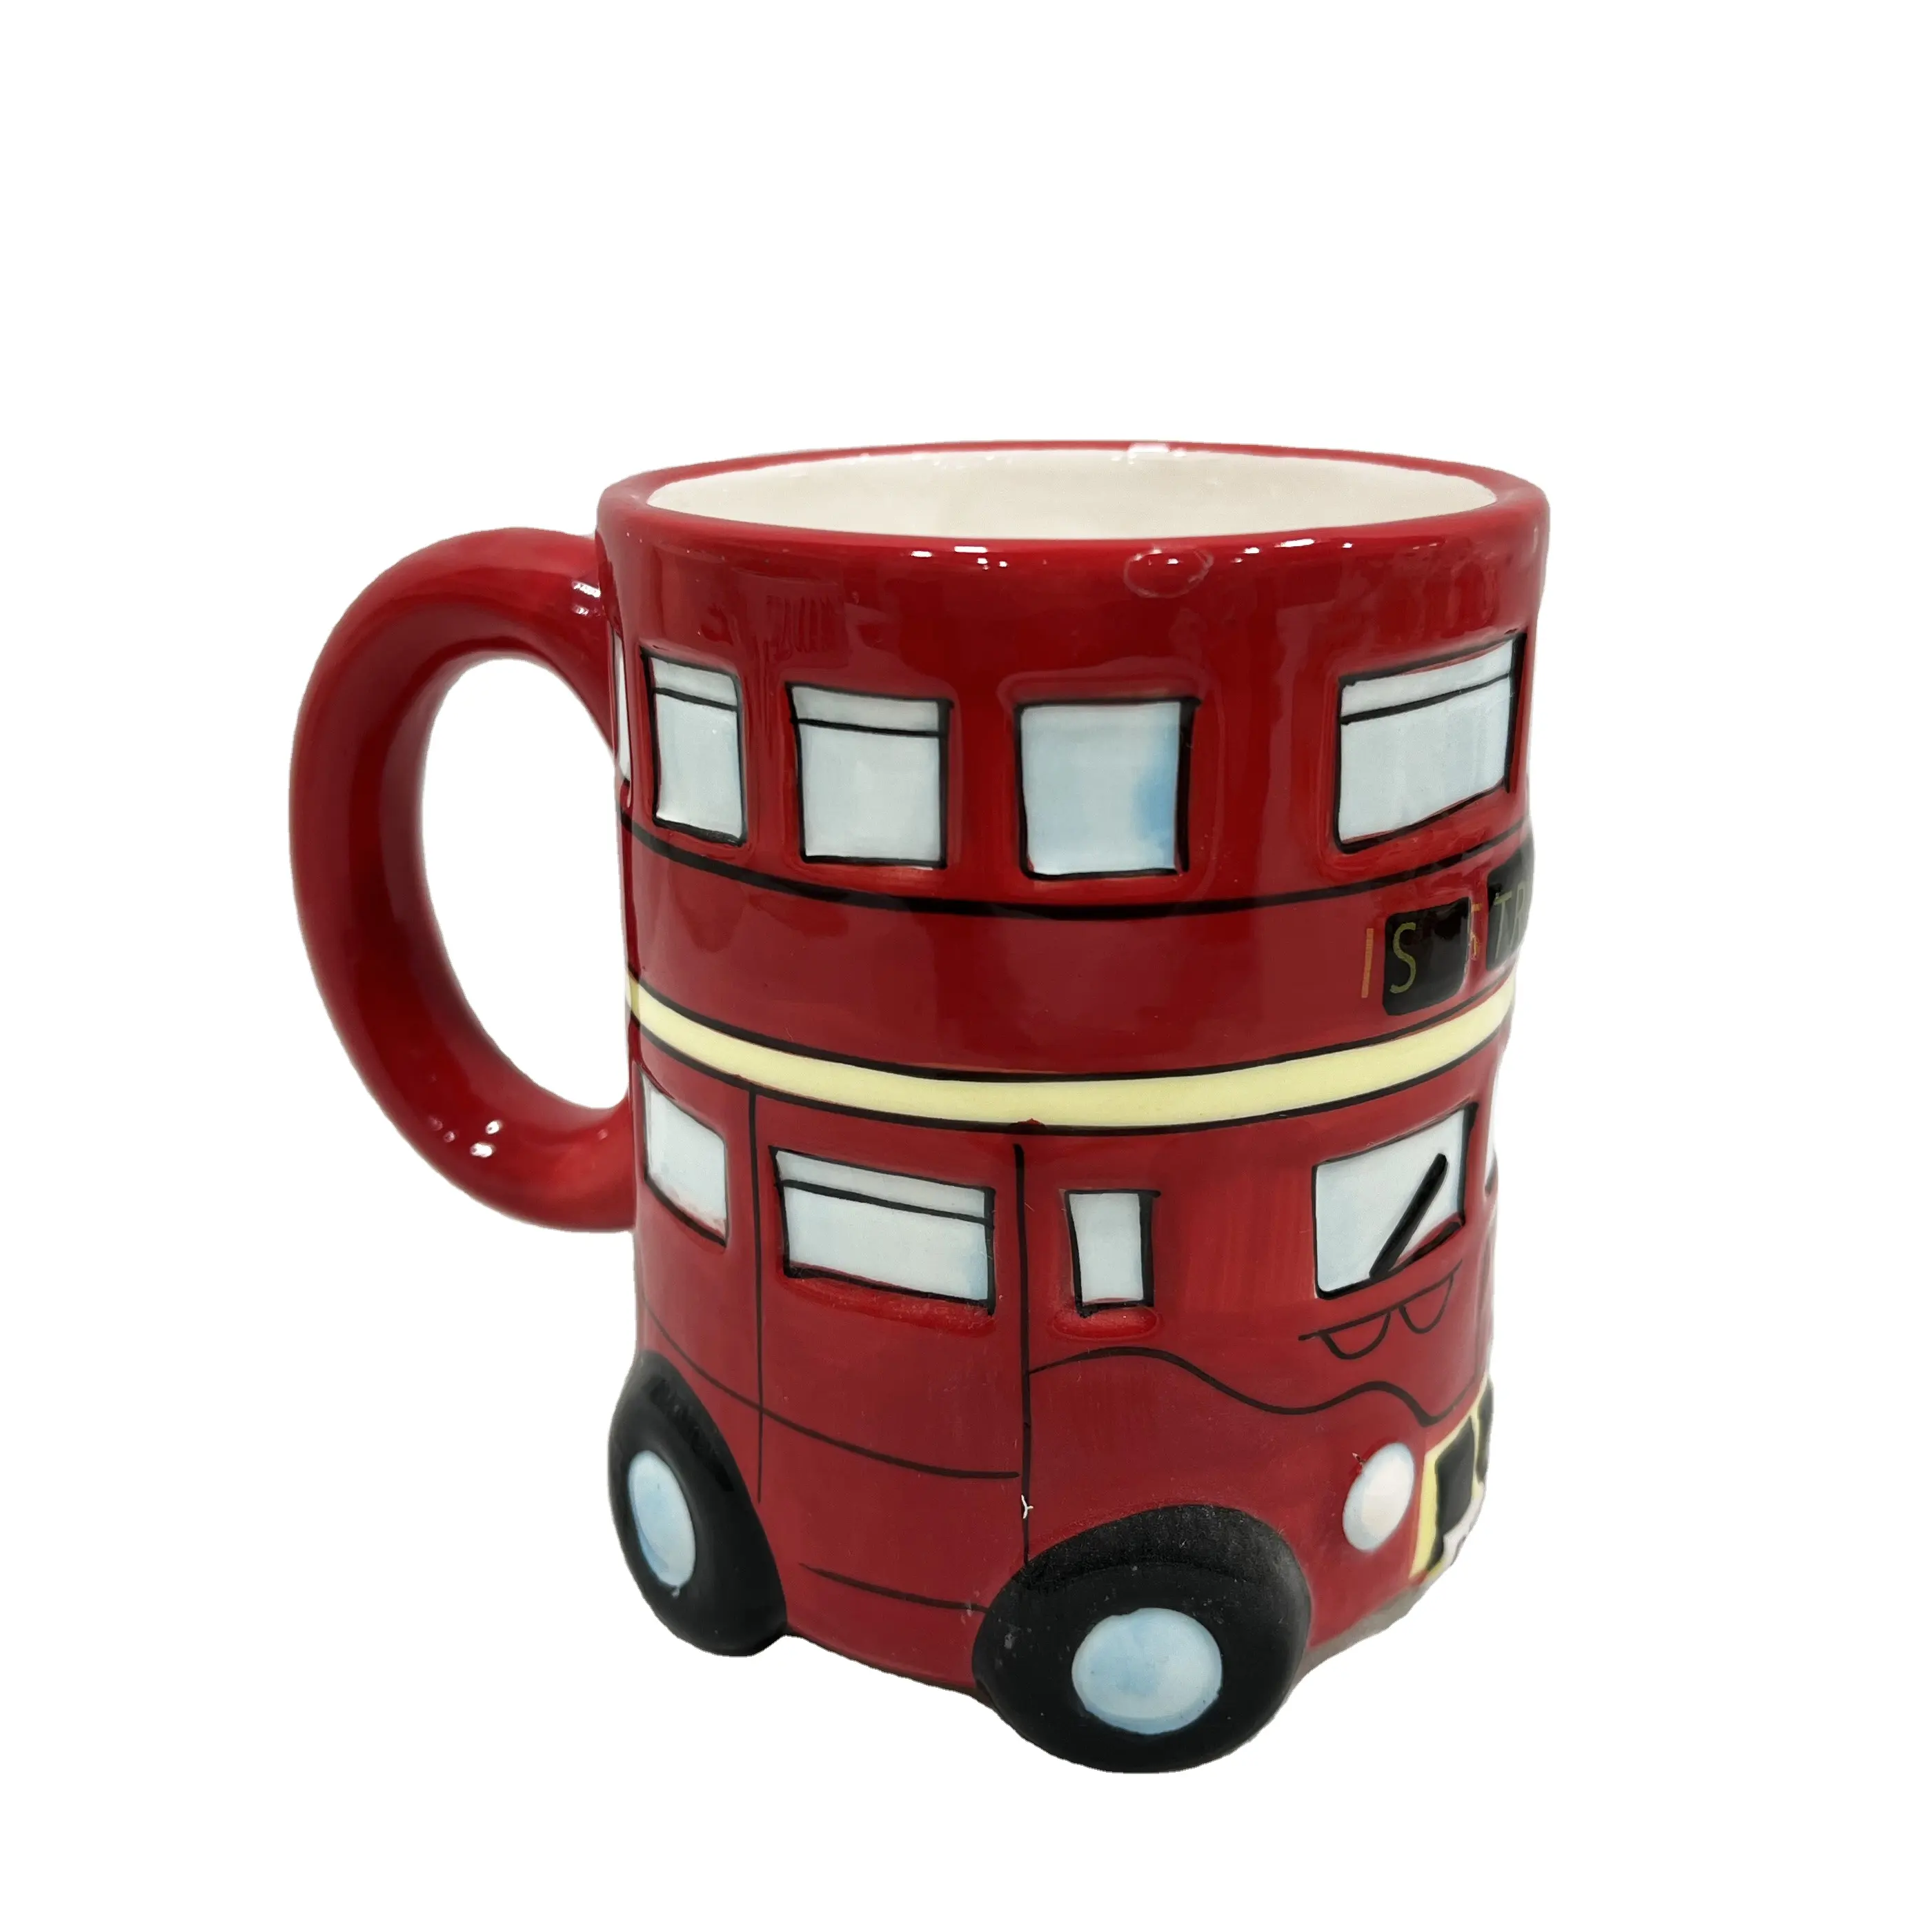 London red bus mug ceramic cup London tourist gift